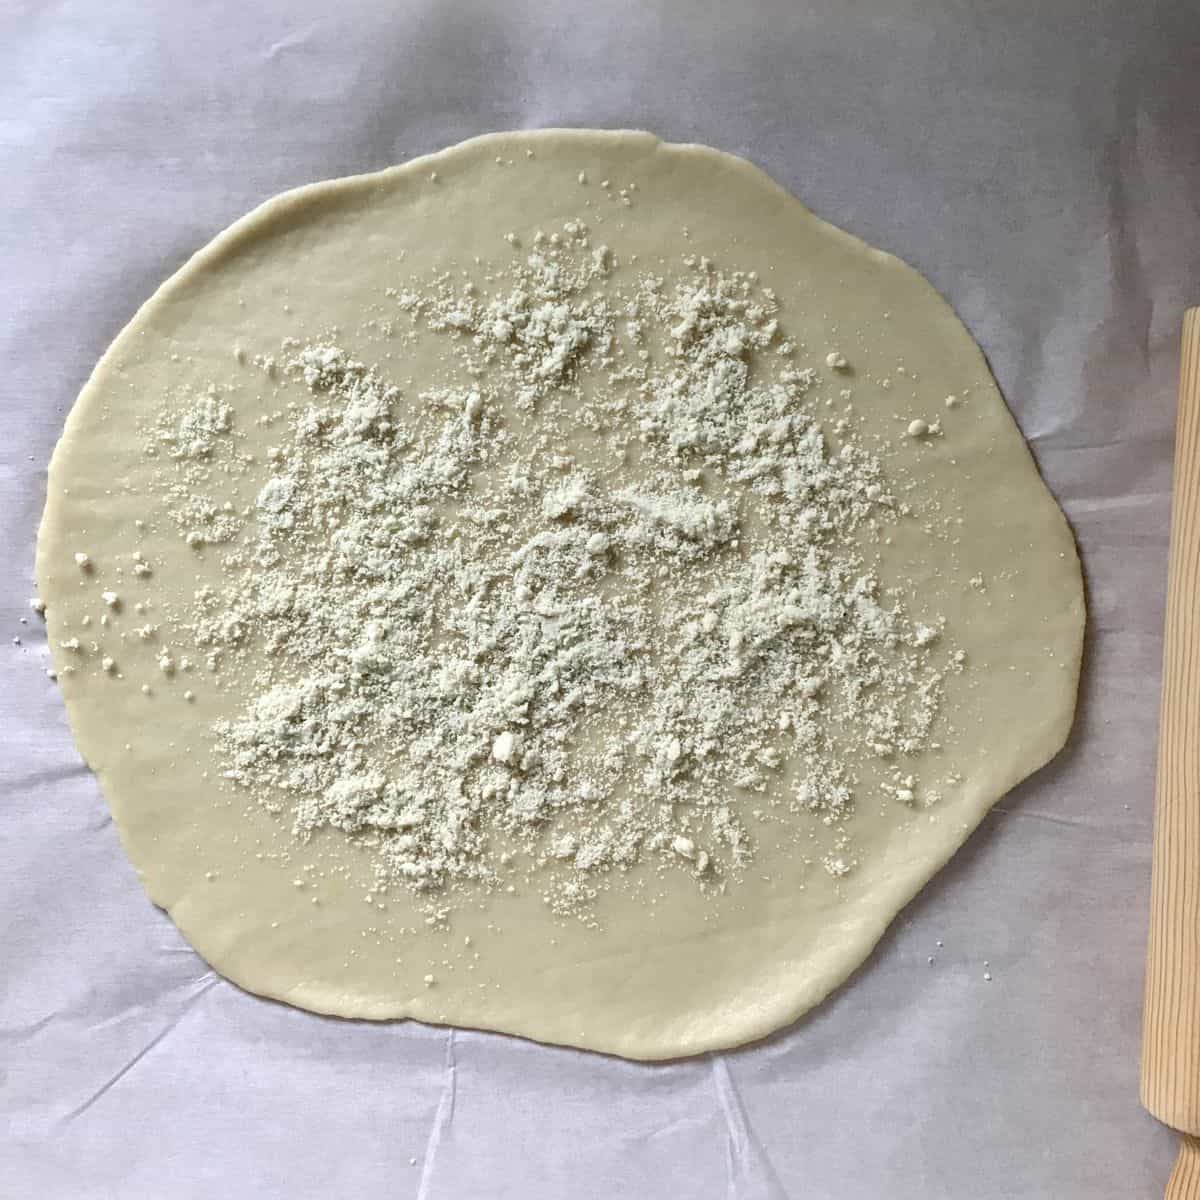 Ground almond sprinkled on crostata dough.